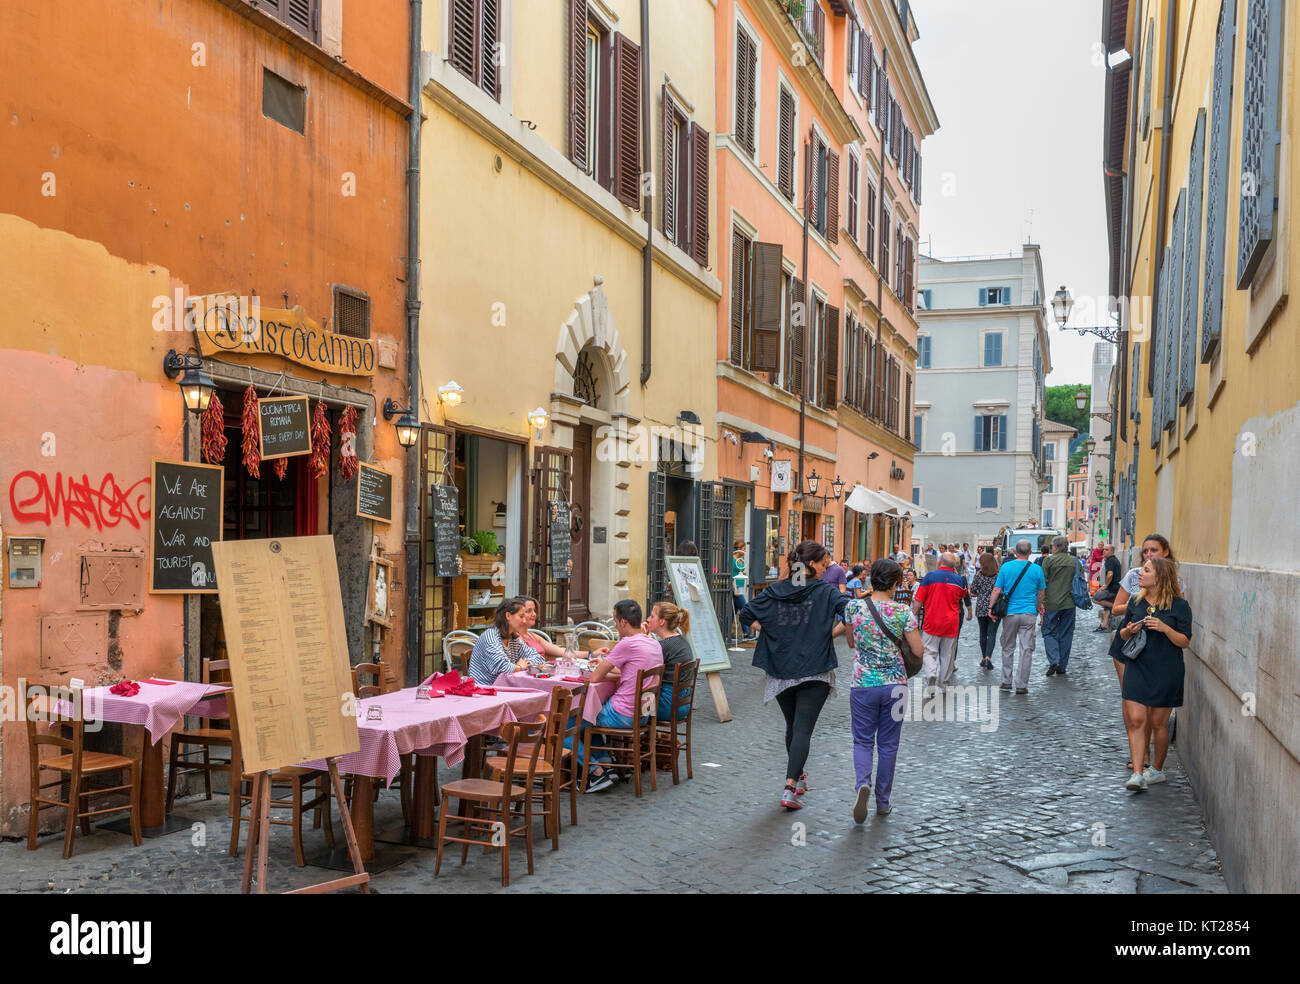 Sidewalk cafe and restaurant on Via della Lungaretta, Trastevere, Rome, Italy Stock Photo